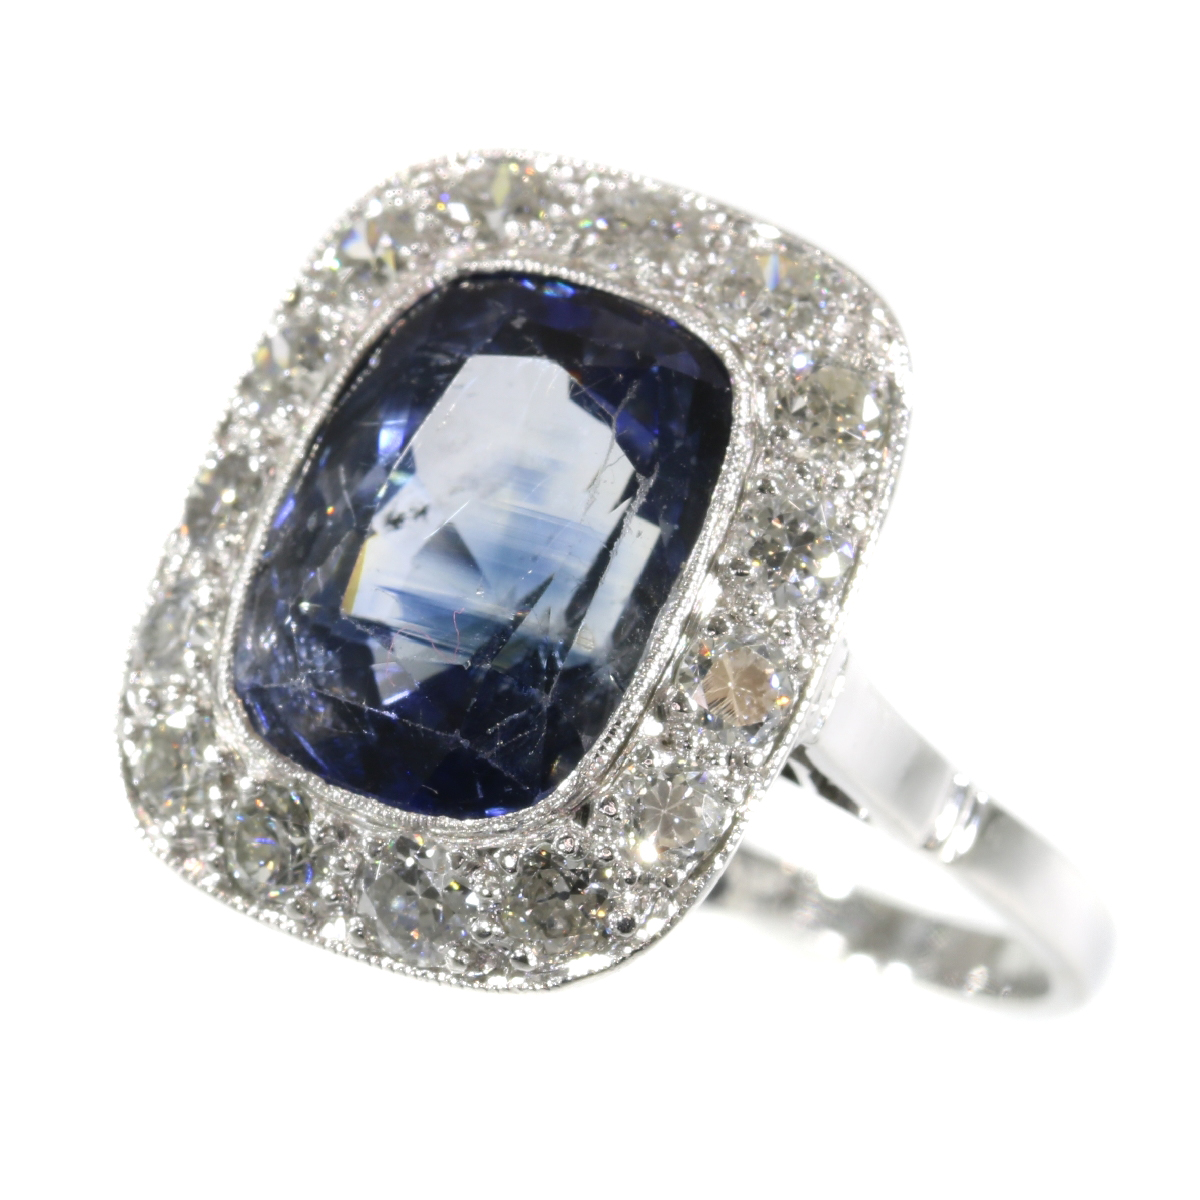 Original vintage Art Deco sapphire and diamond engagement ring